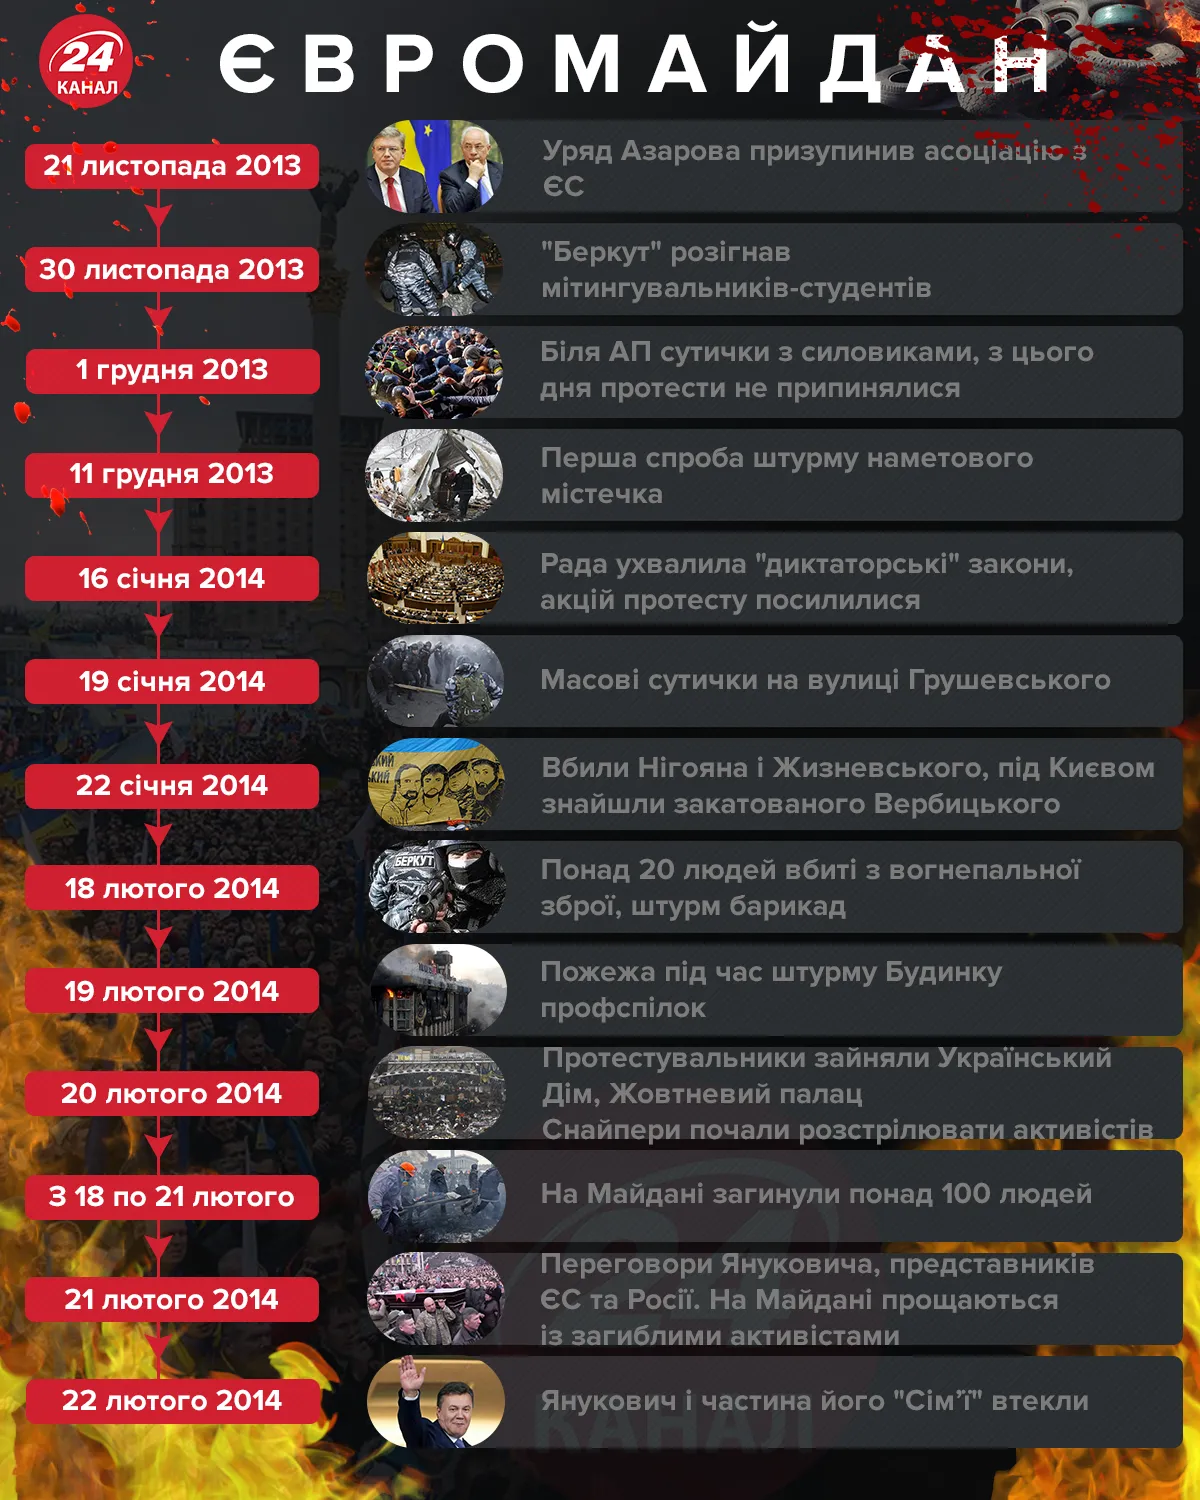 Евромайдан картинка 24 канала